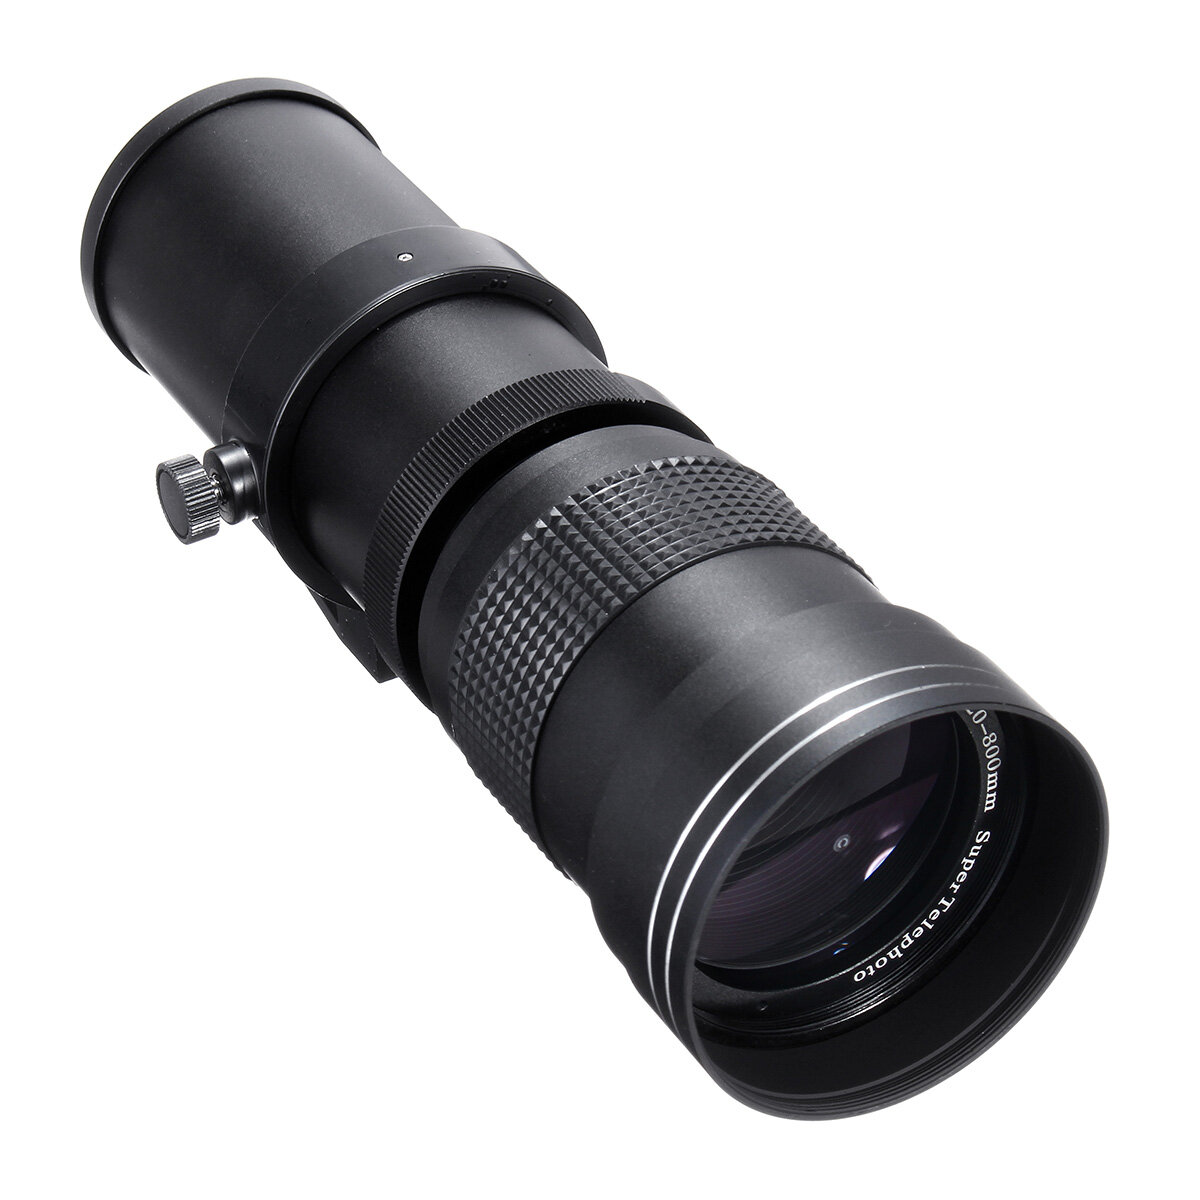 IPRee® 420-800mm F/8.3-16 Lente de súper teleobjetivo con zoom manual + Montura T para cámaras Nikon, Sony y Pentax SLR